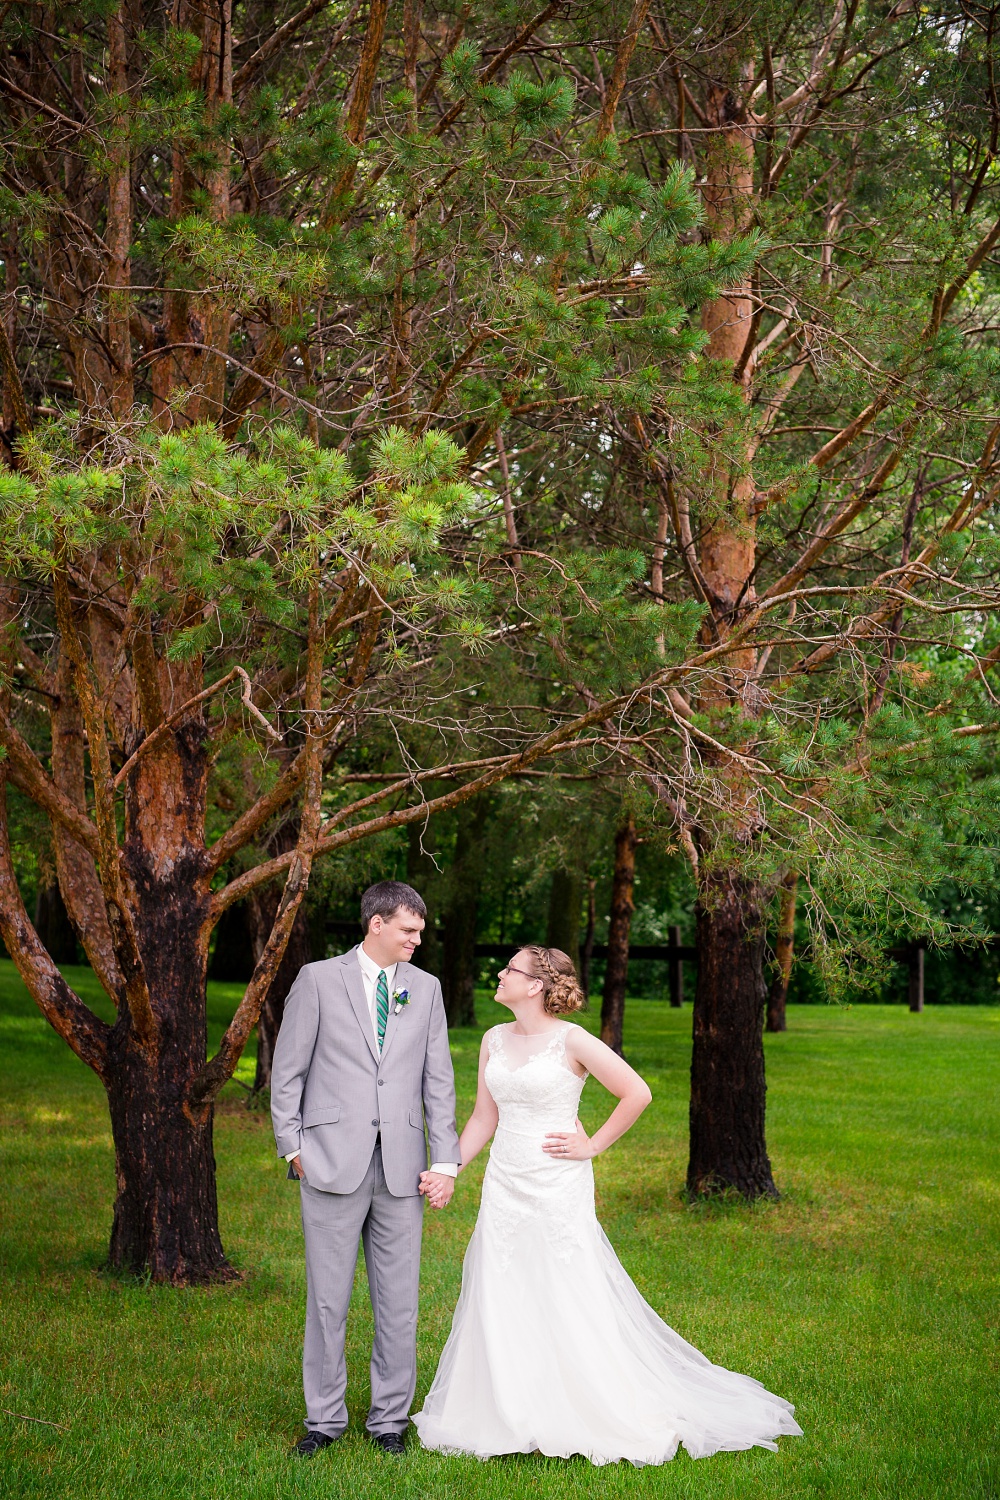 Moorhead, MN wedding | Photos at River Oaks Park | Ceremony at First Presbyterian Church | Amber Langerud Photography